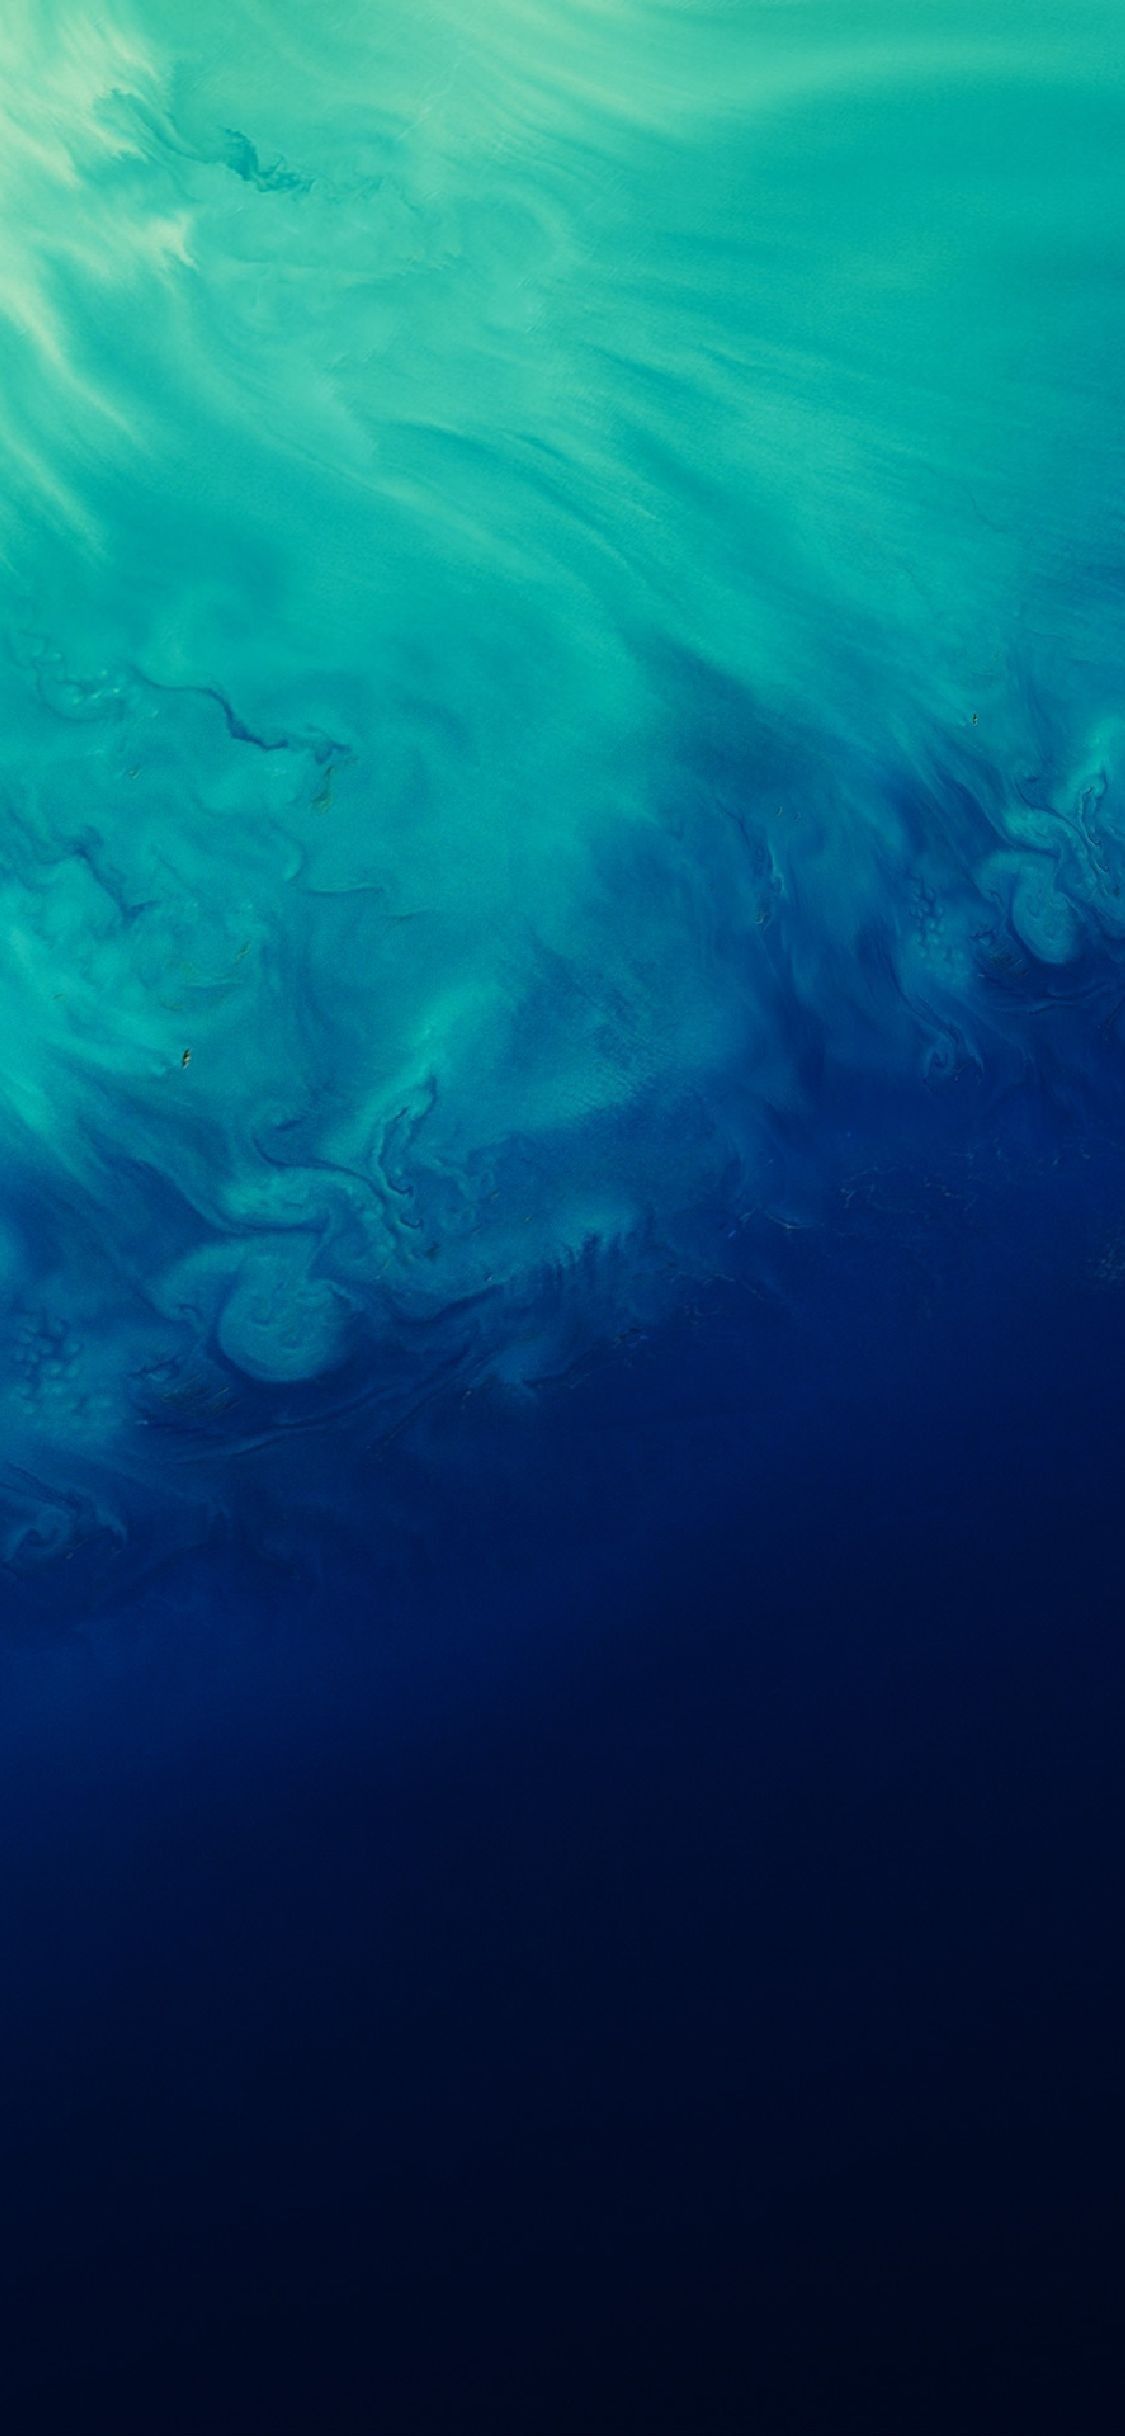 Blue swirl. Underwater wallpaper, iPhone wallpaper, iPhone lockscreen wallpaper